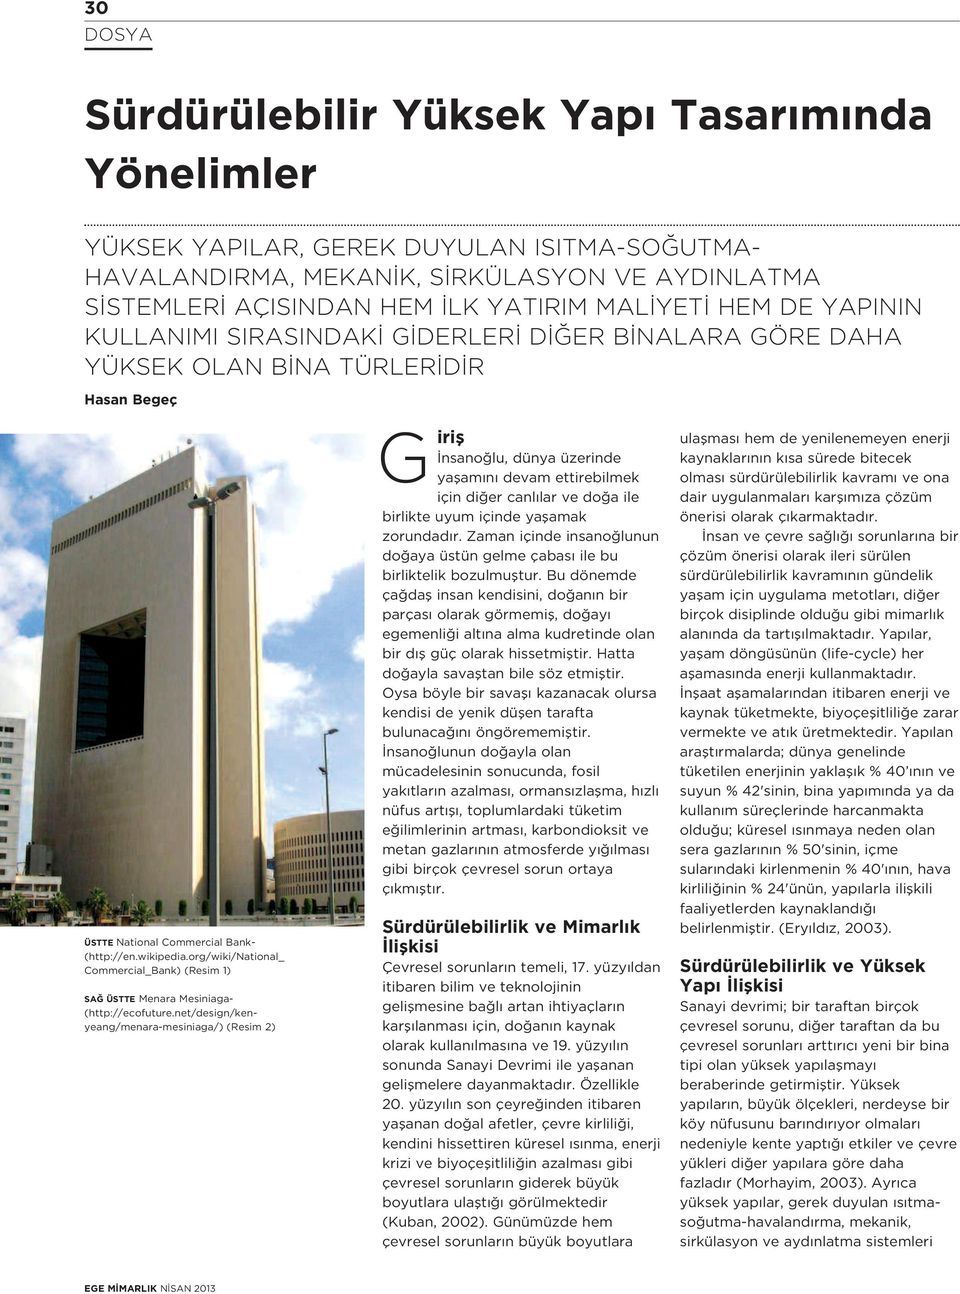 org/wiki/national_ Commercial_Bank) (Resim 1) SA ÜSTTE Menara Mesiniaga- (http://ecofuture.